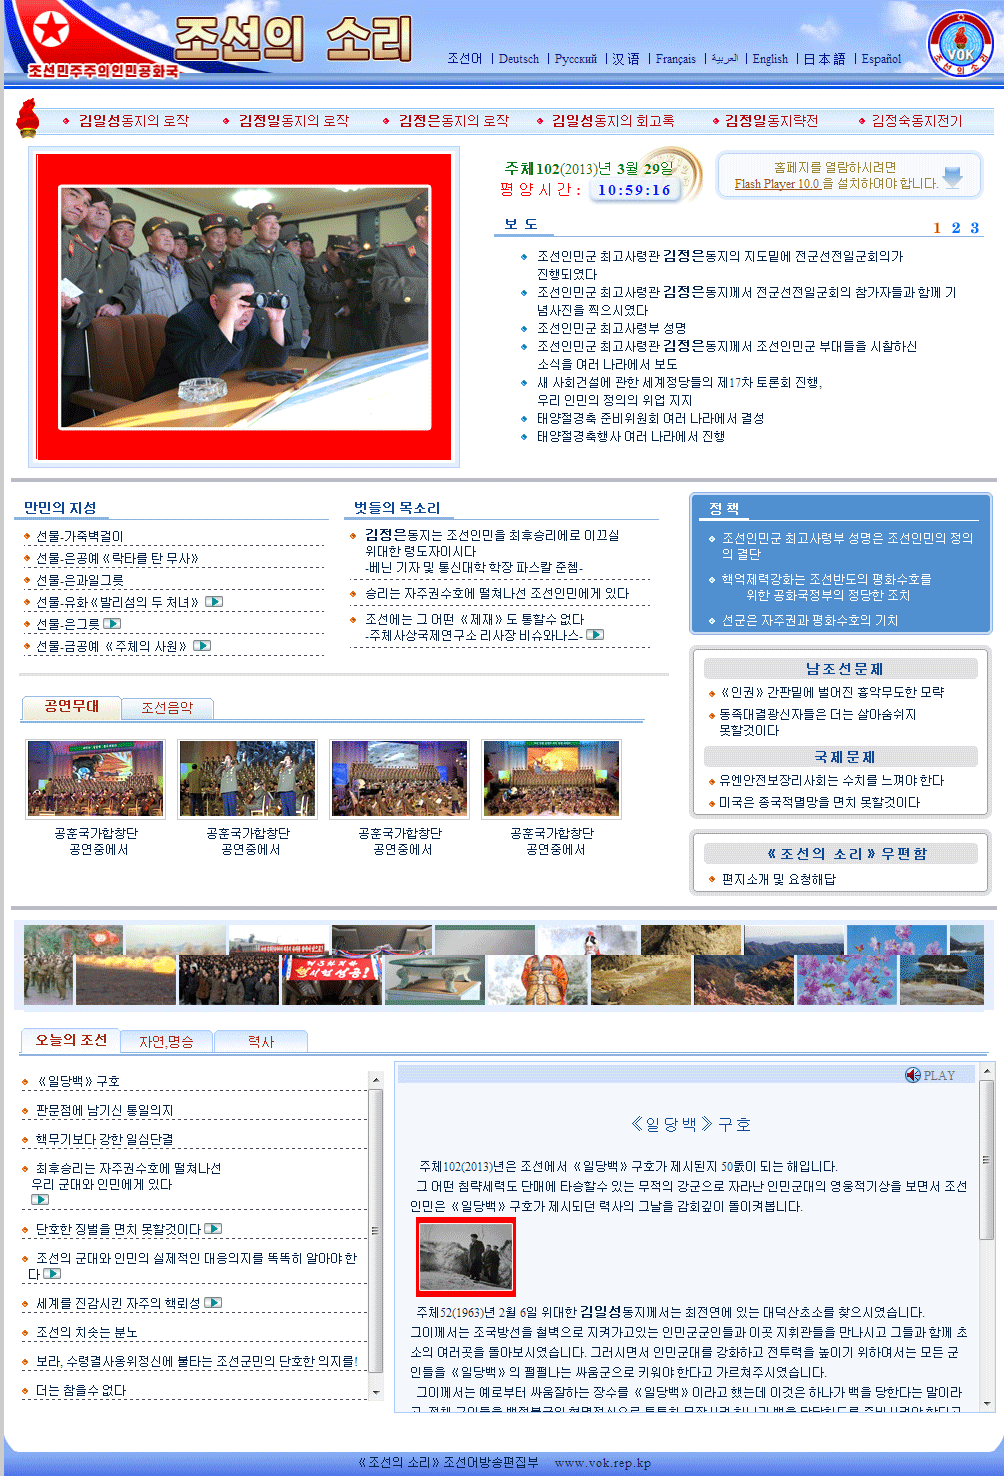 Official website of North Korea